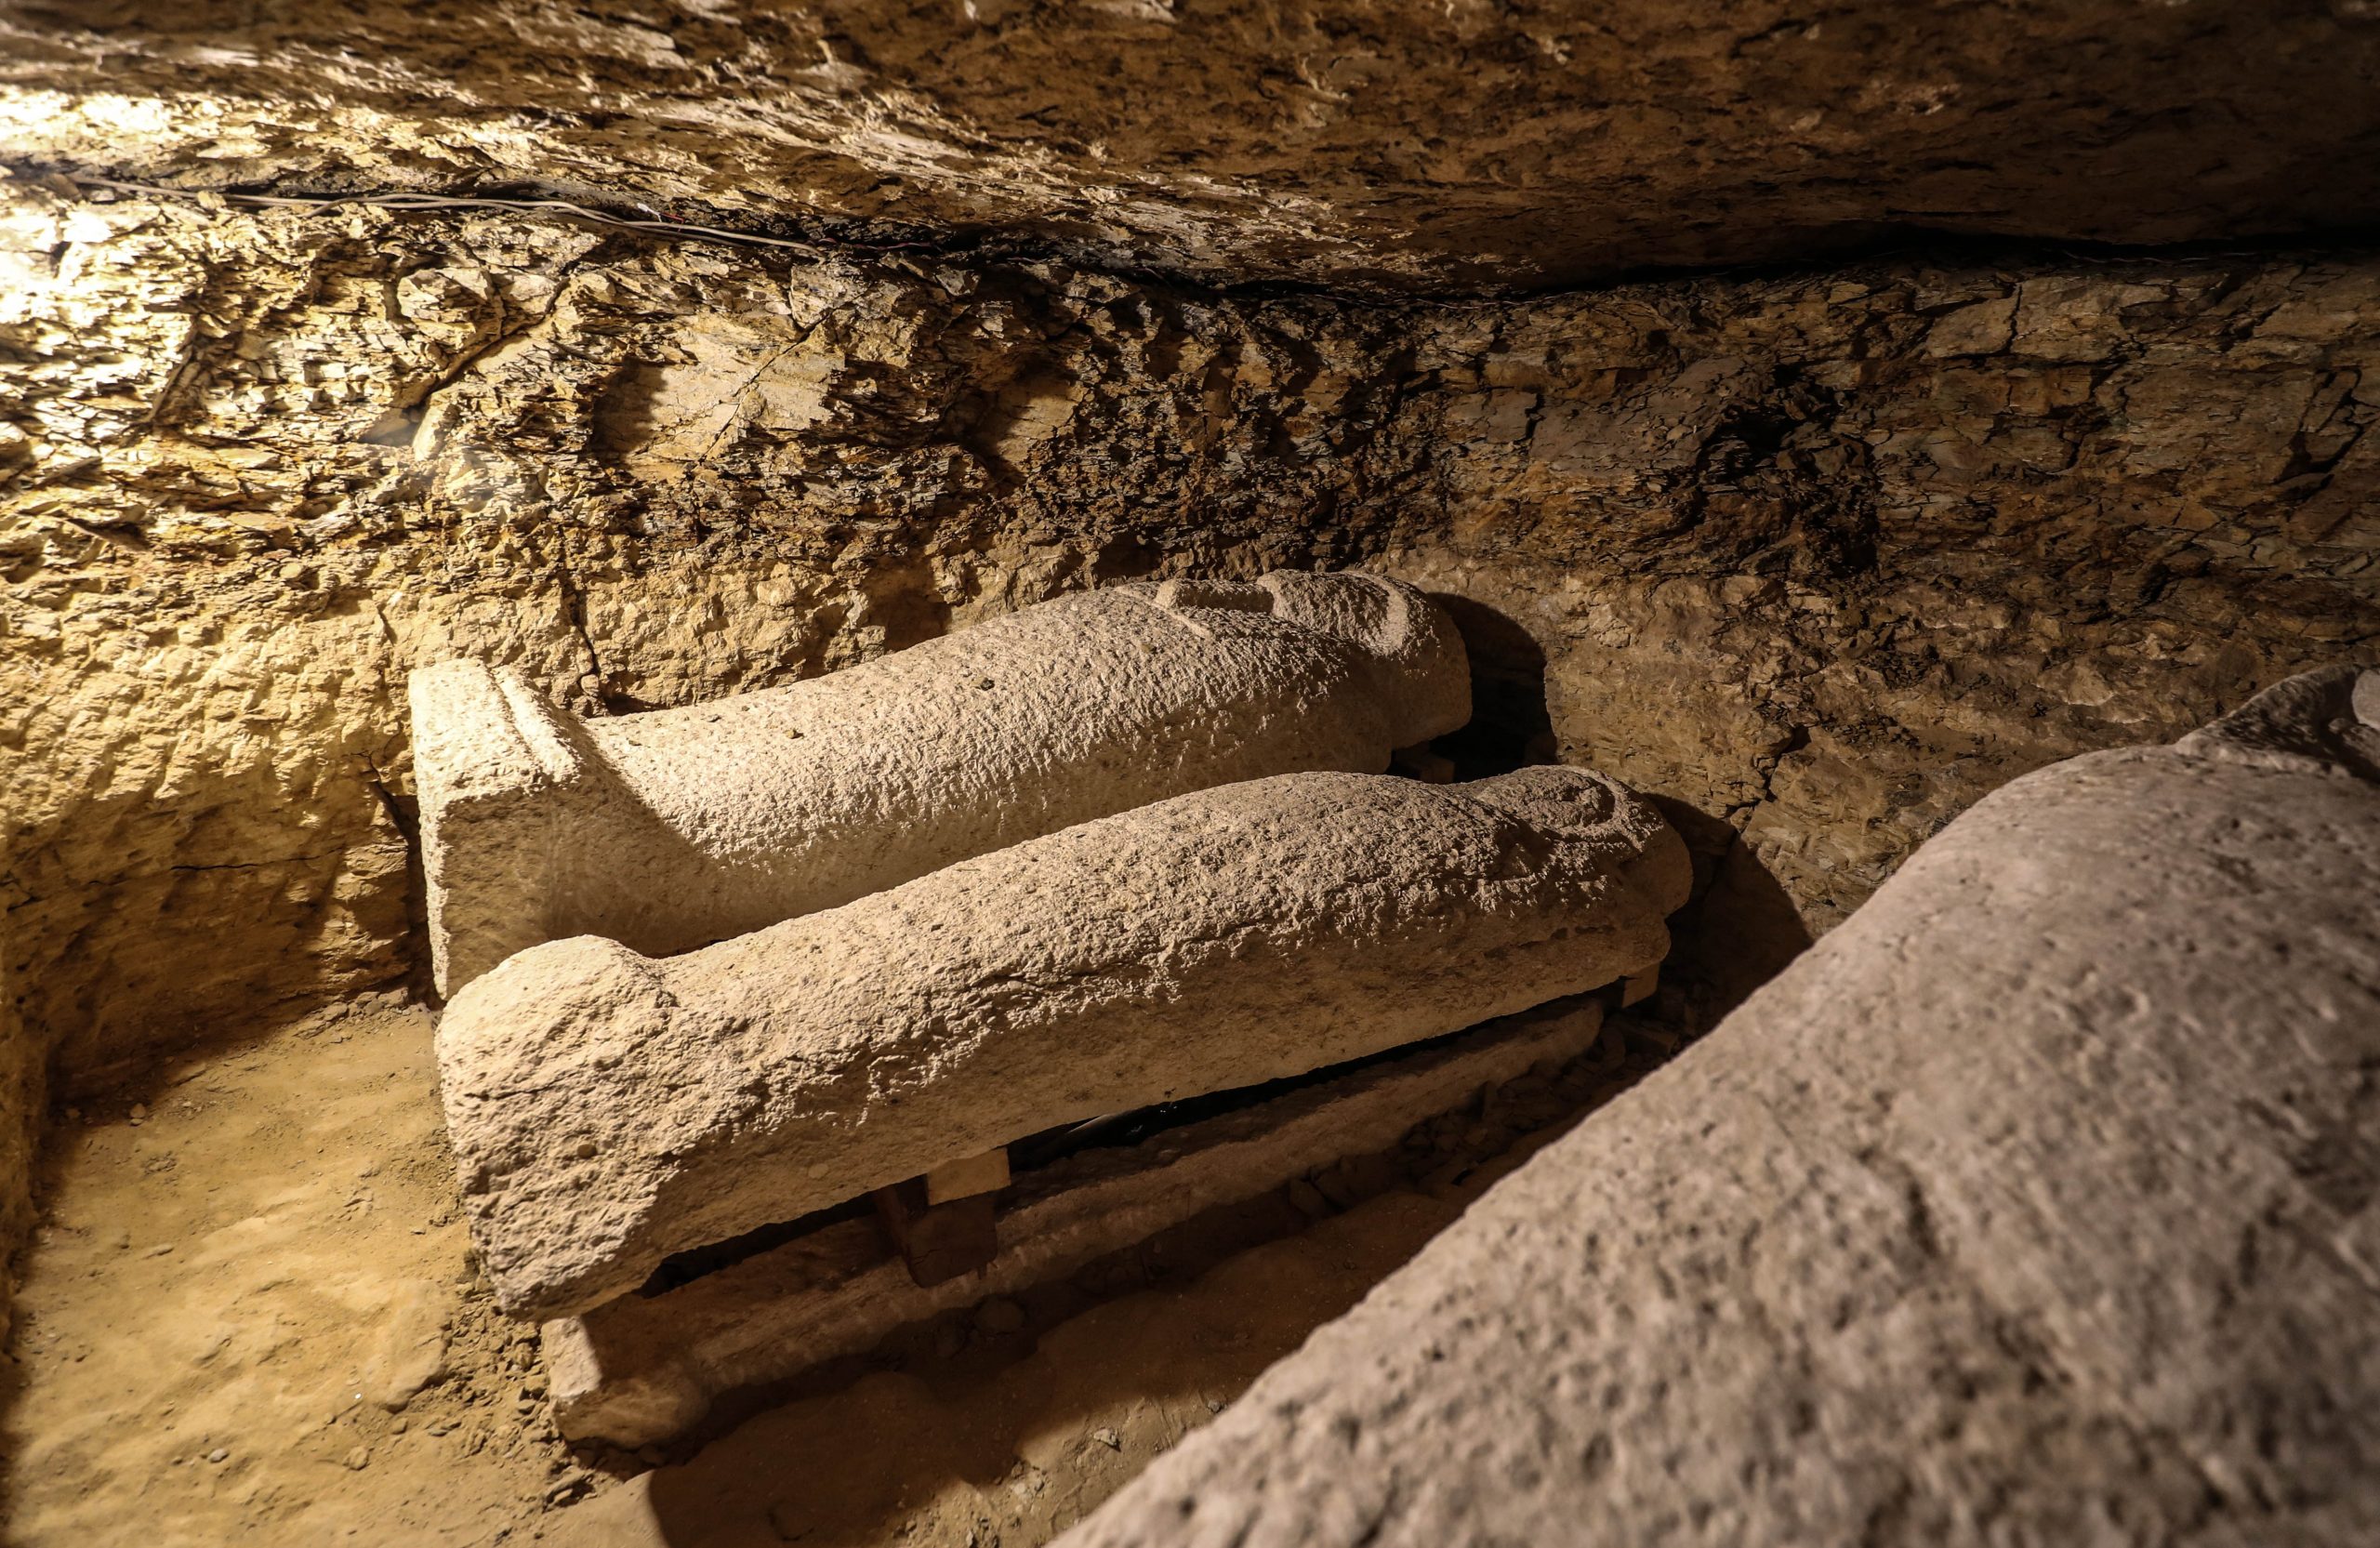 Egypt finds treasure trove of over 100 sarcophagi